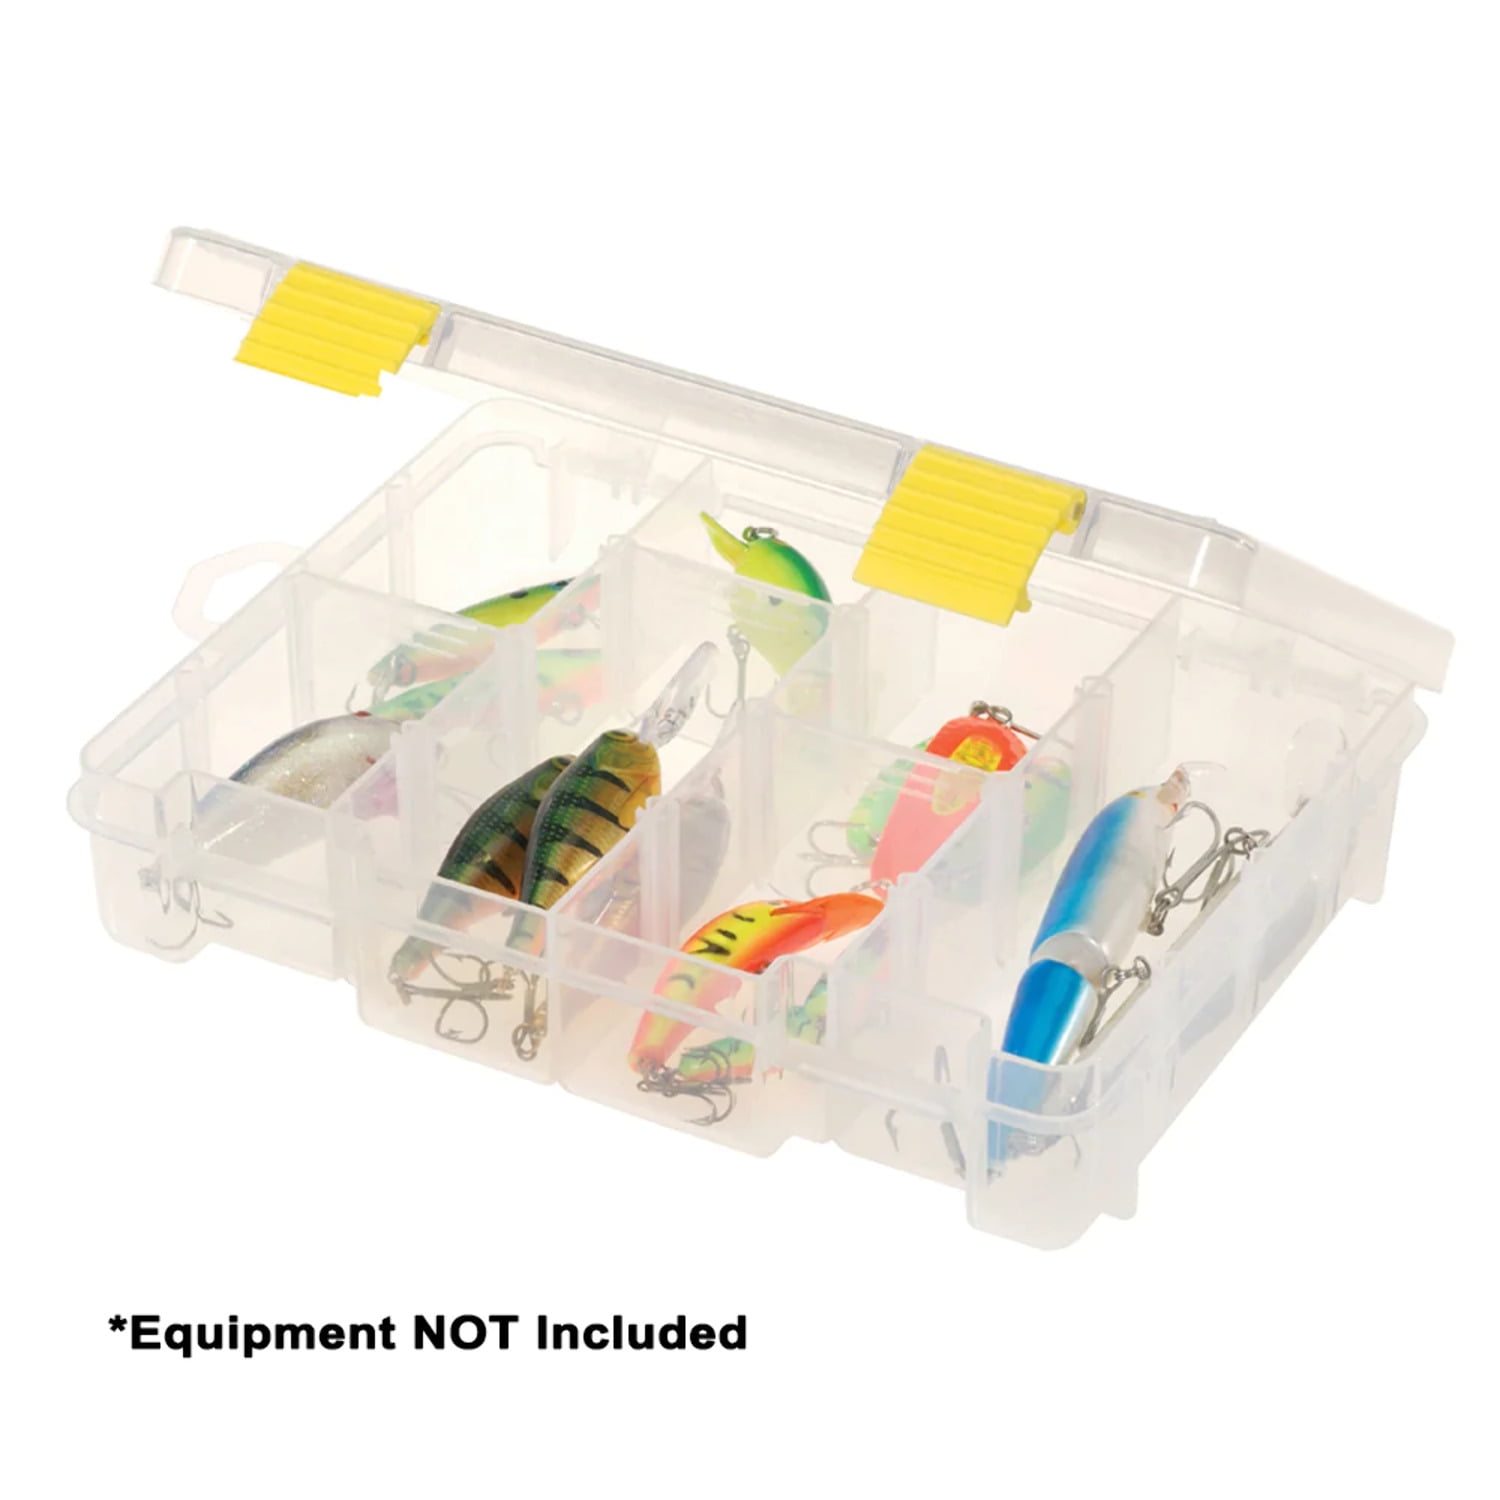 Plano Fishing Tackle Boxes & Bait Storage, Prolatch Adjustable